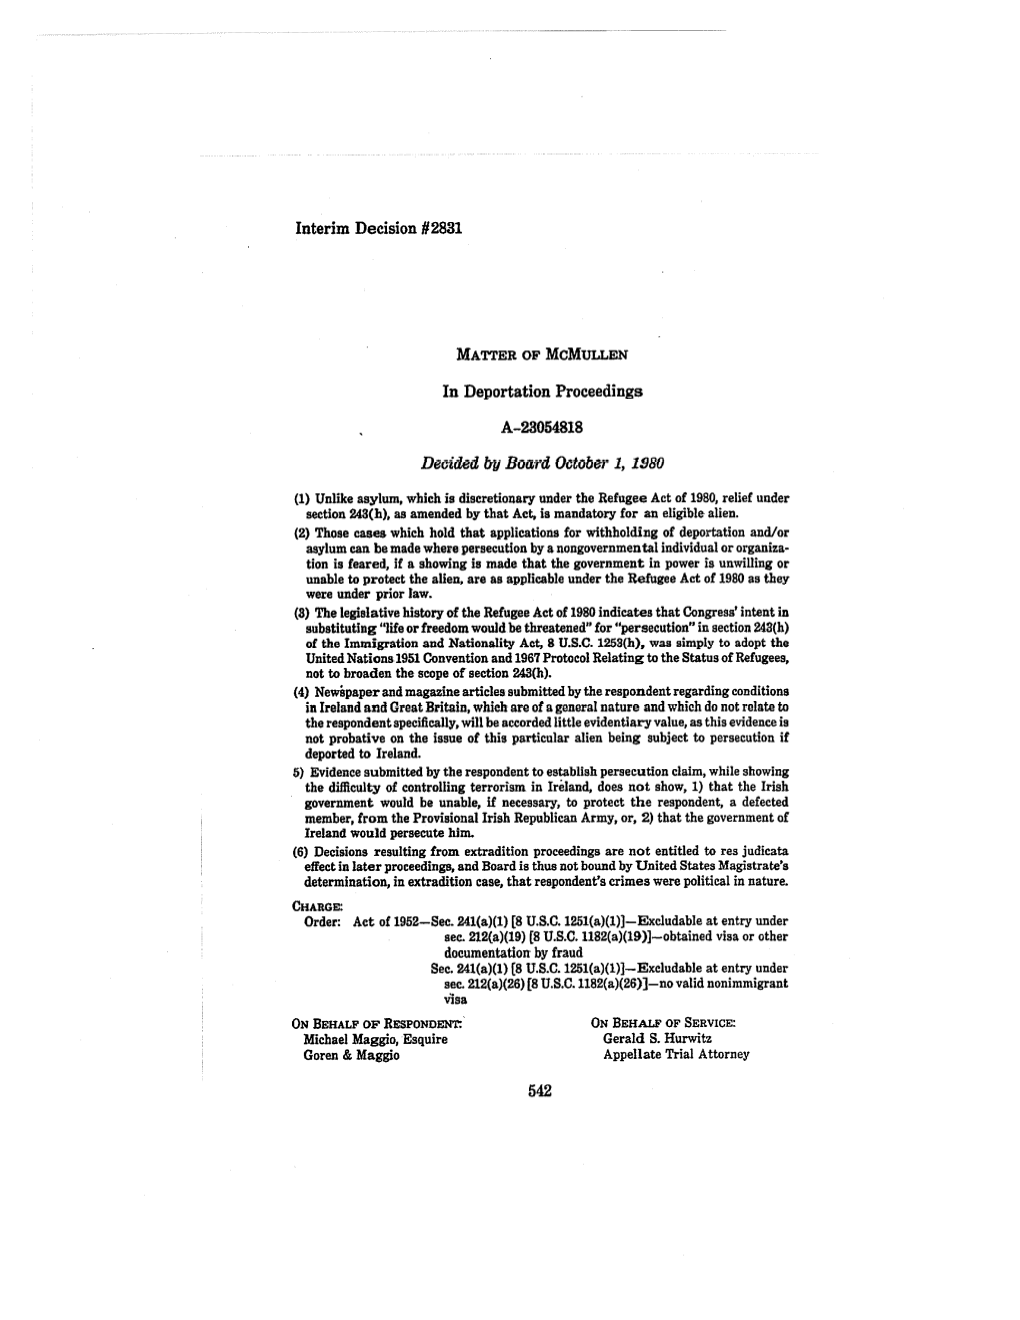 MATTER of MCMULLEN in Deportation Proceedings A-23054818